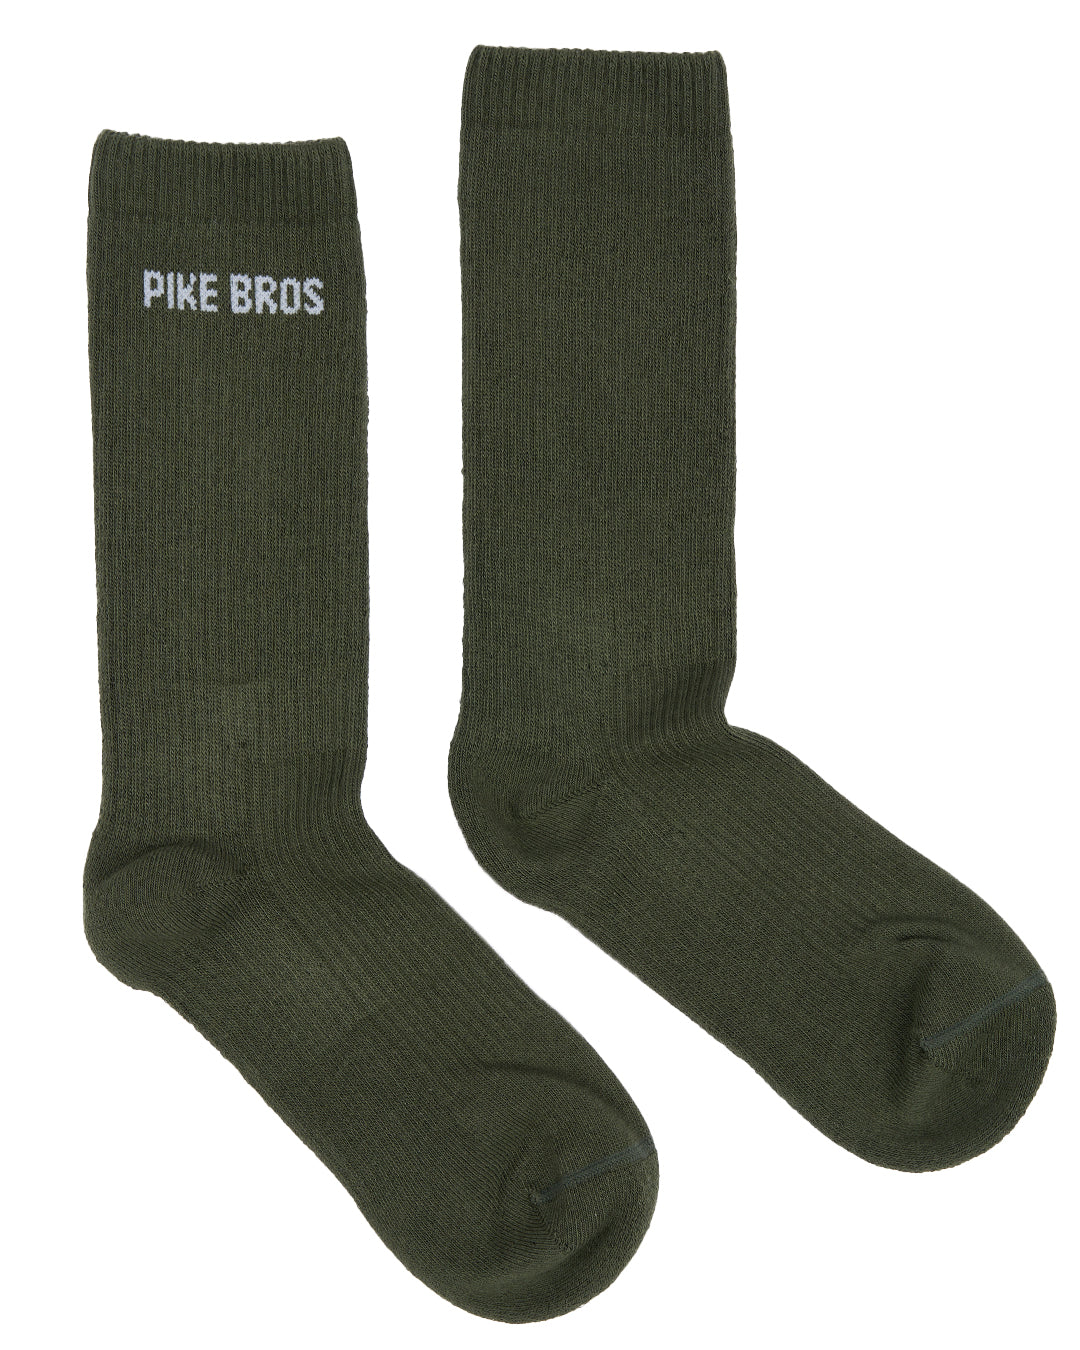 1963 Service Socks | olive